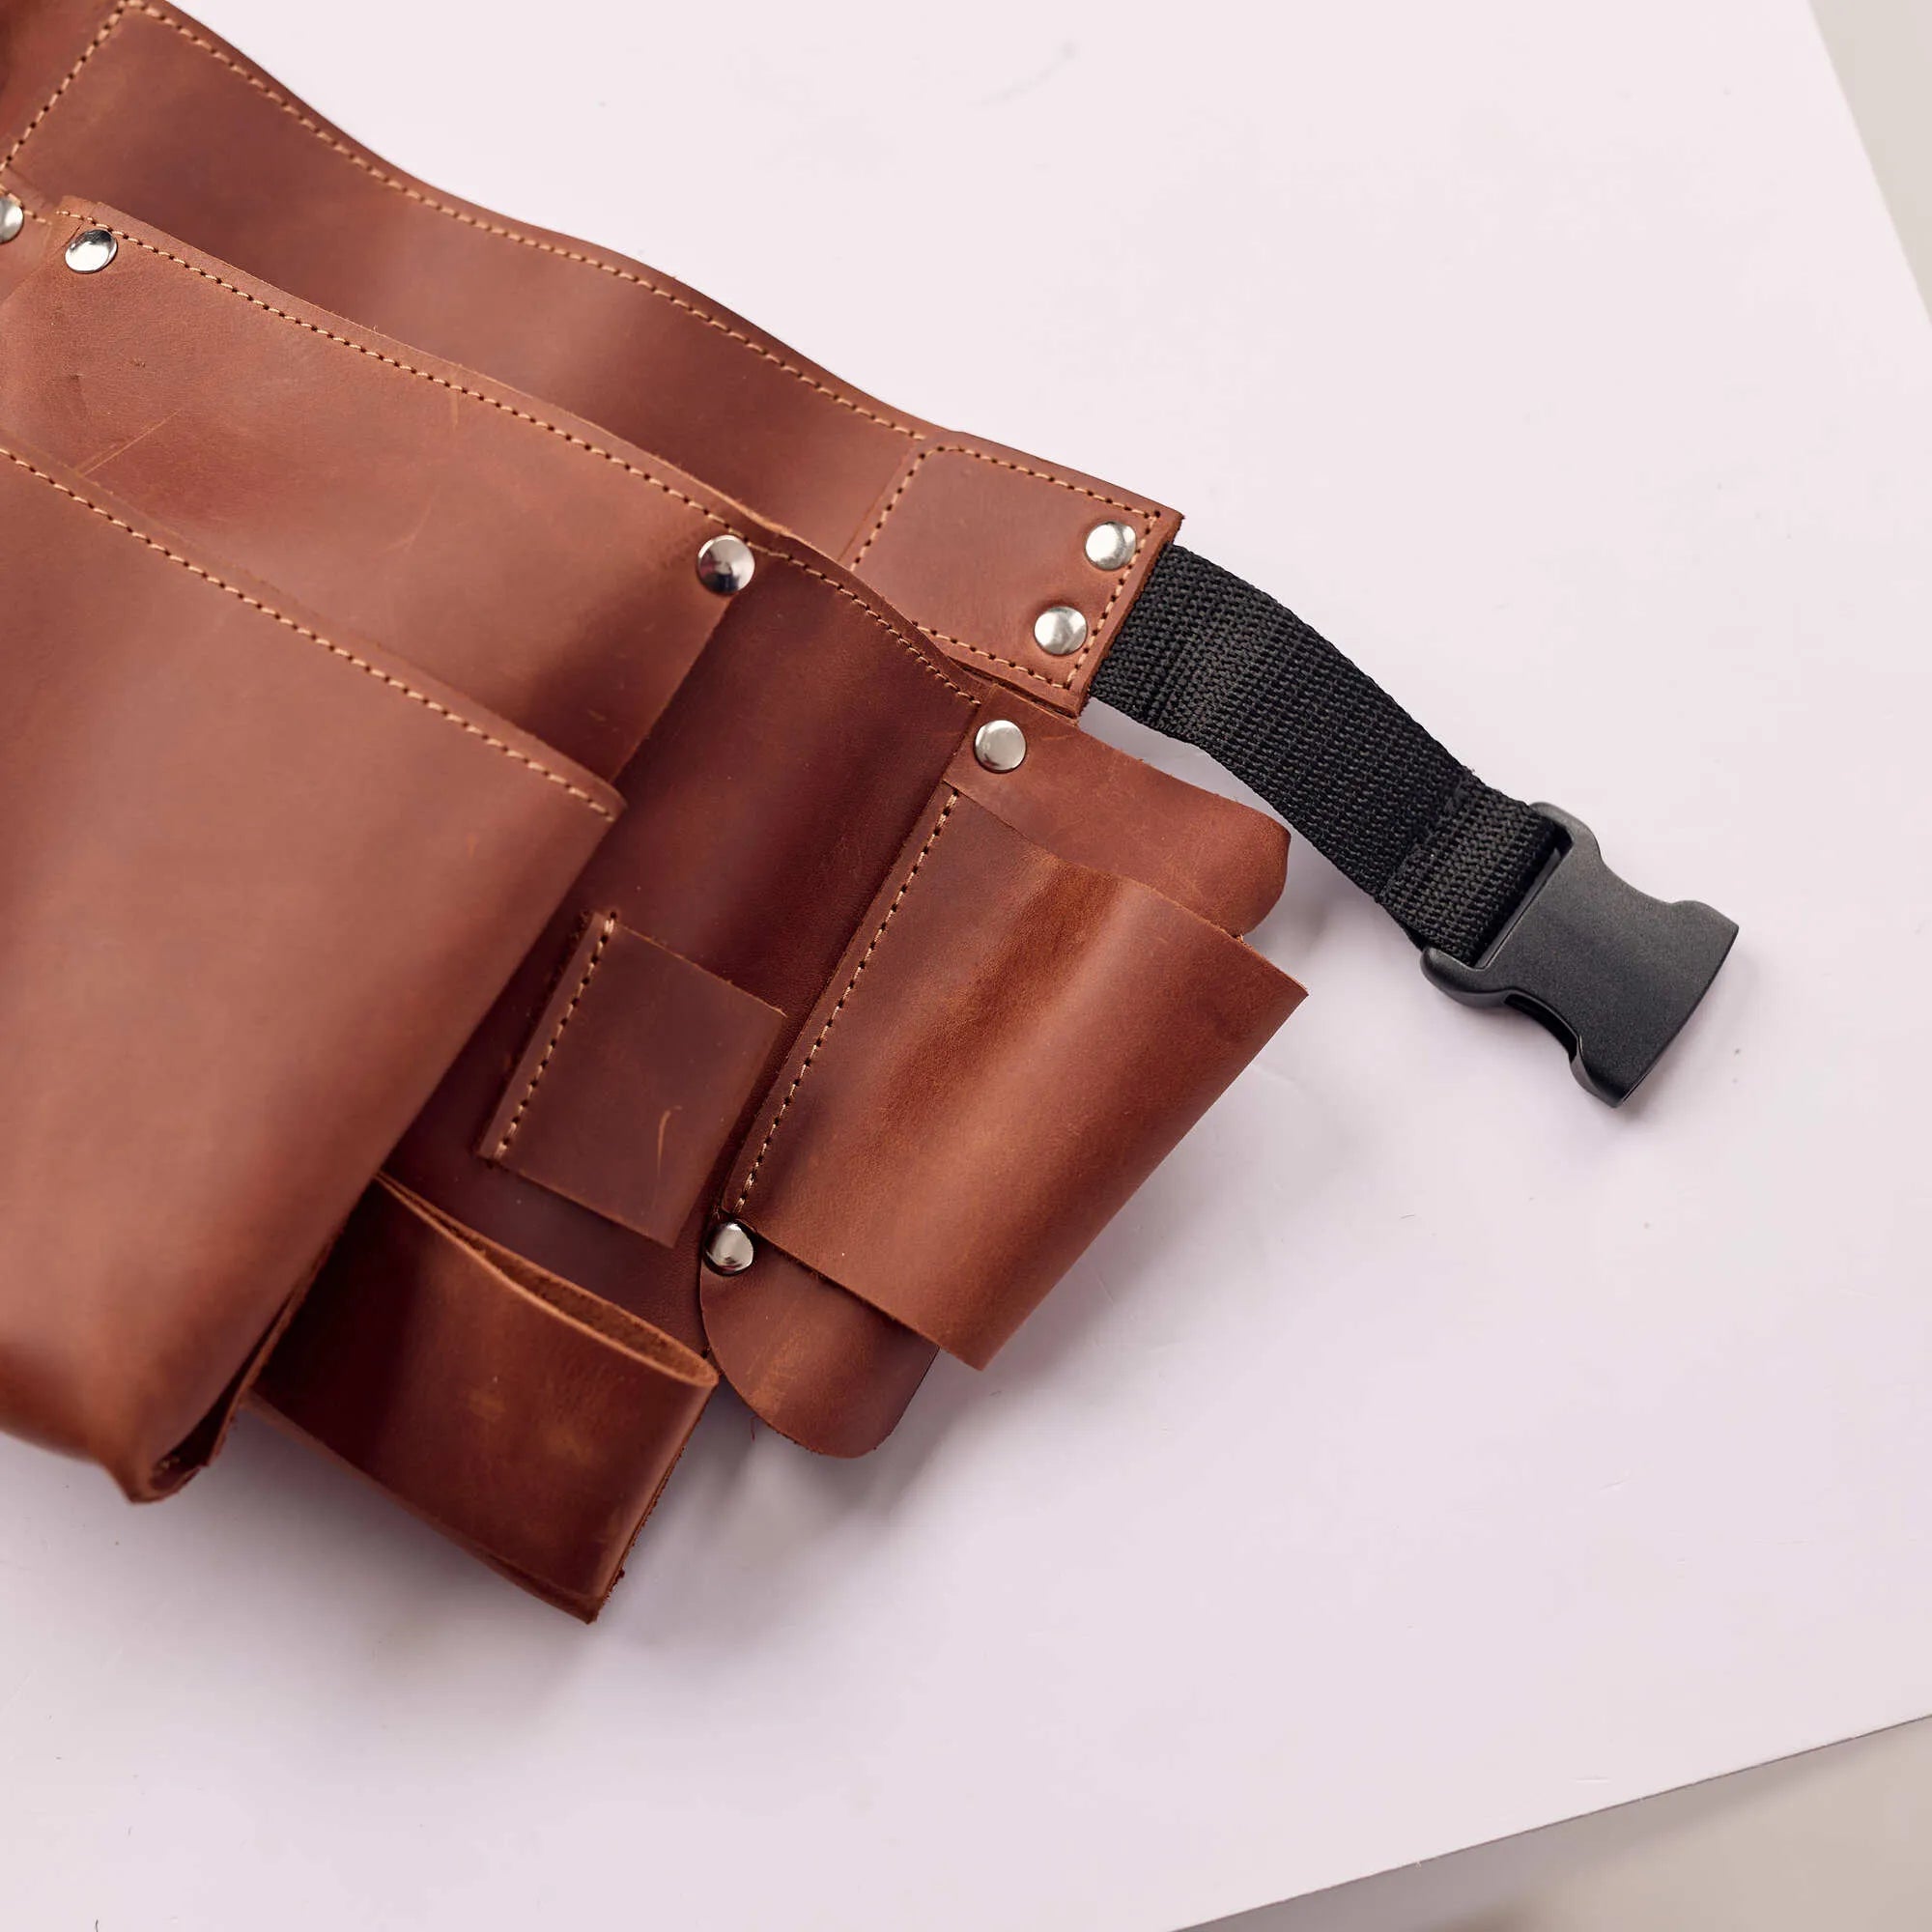 Leather Tool Belt Holster